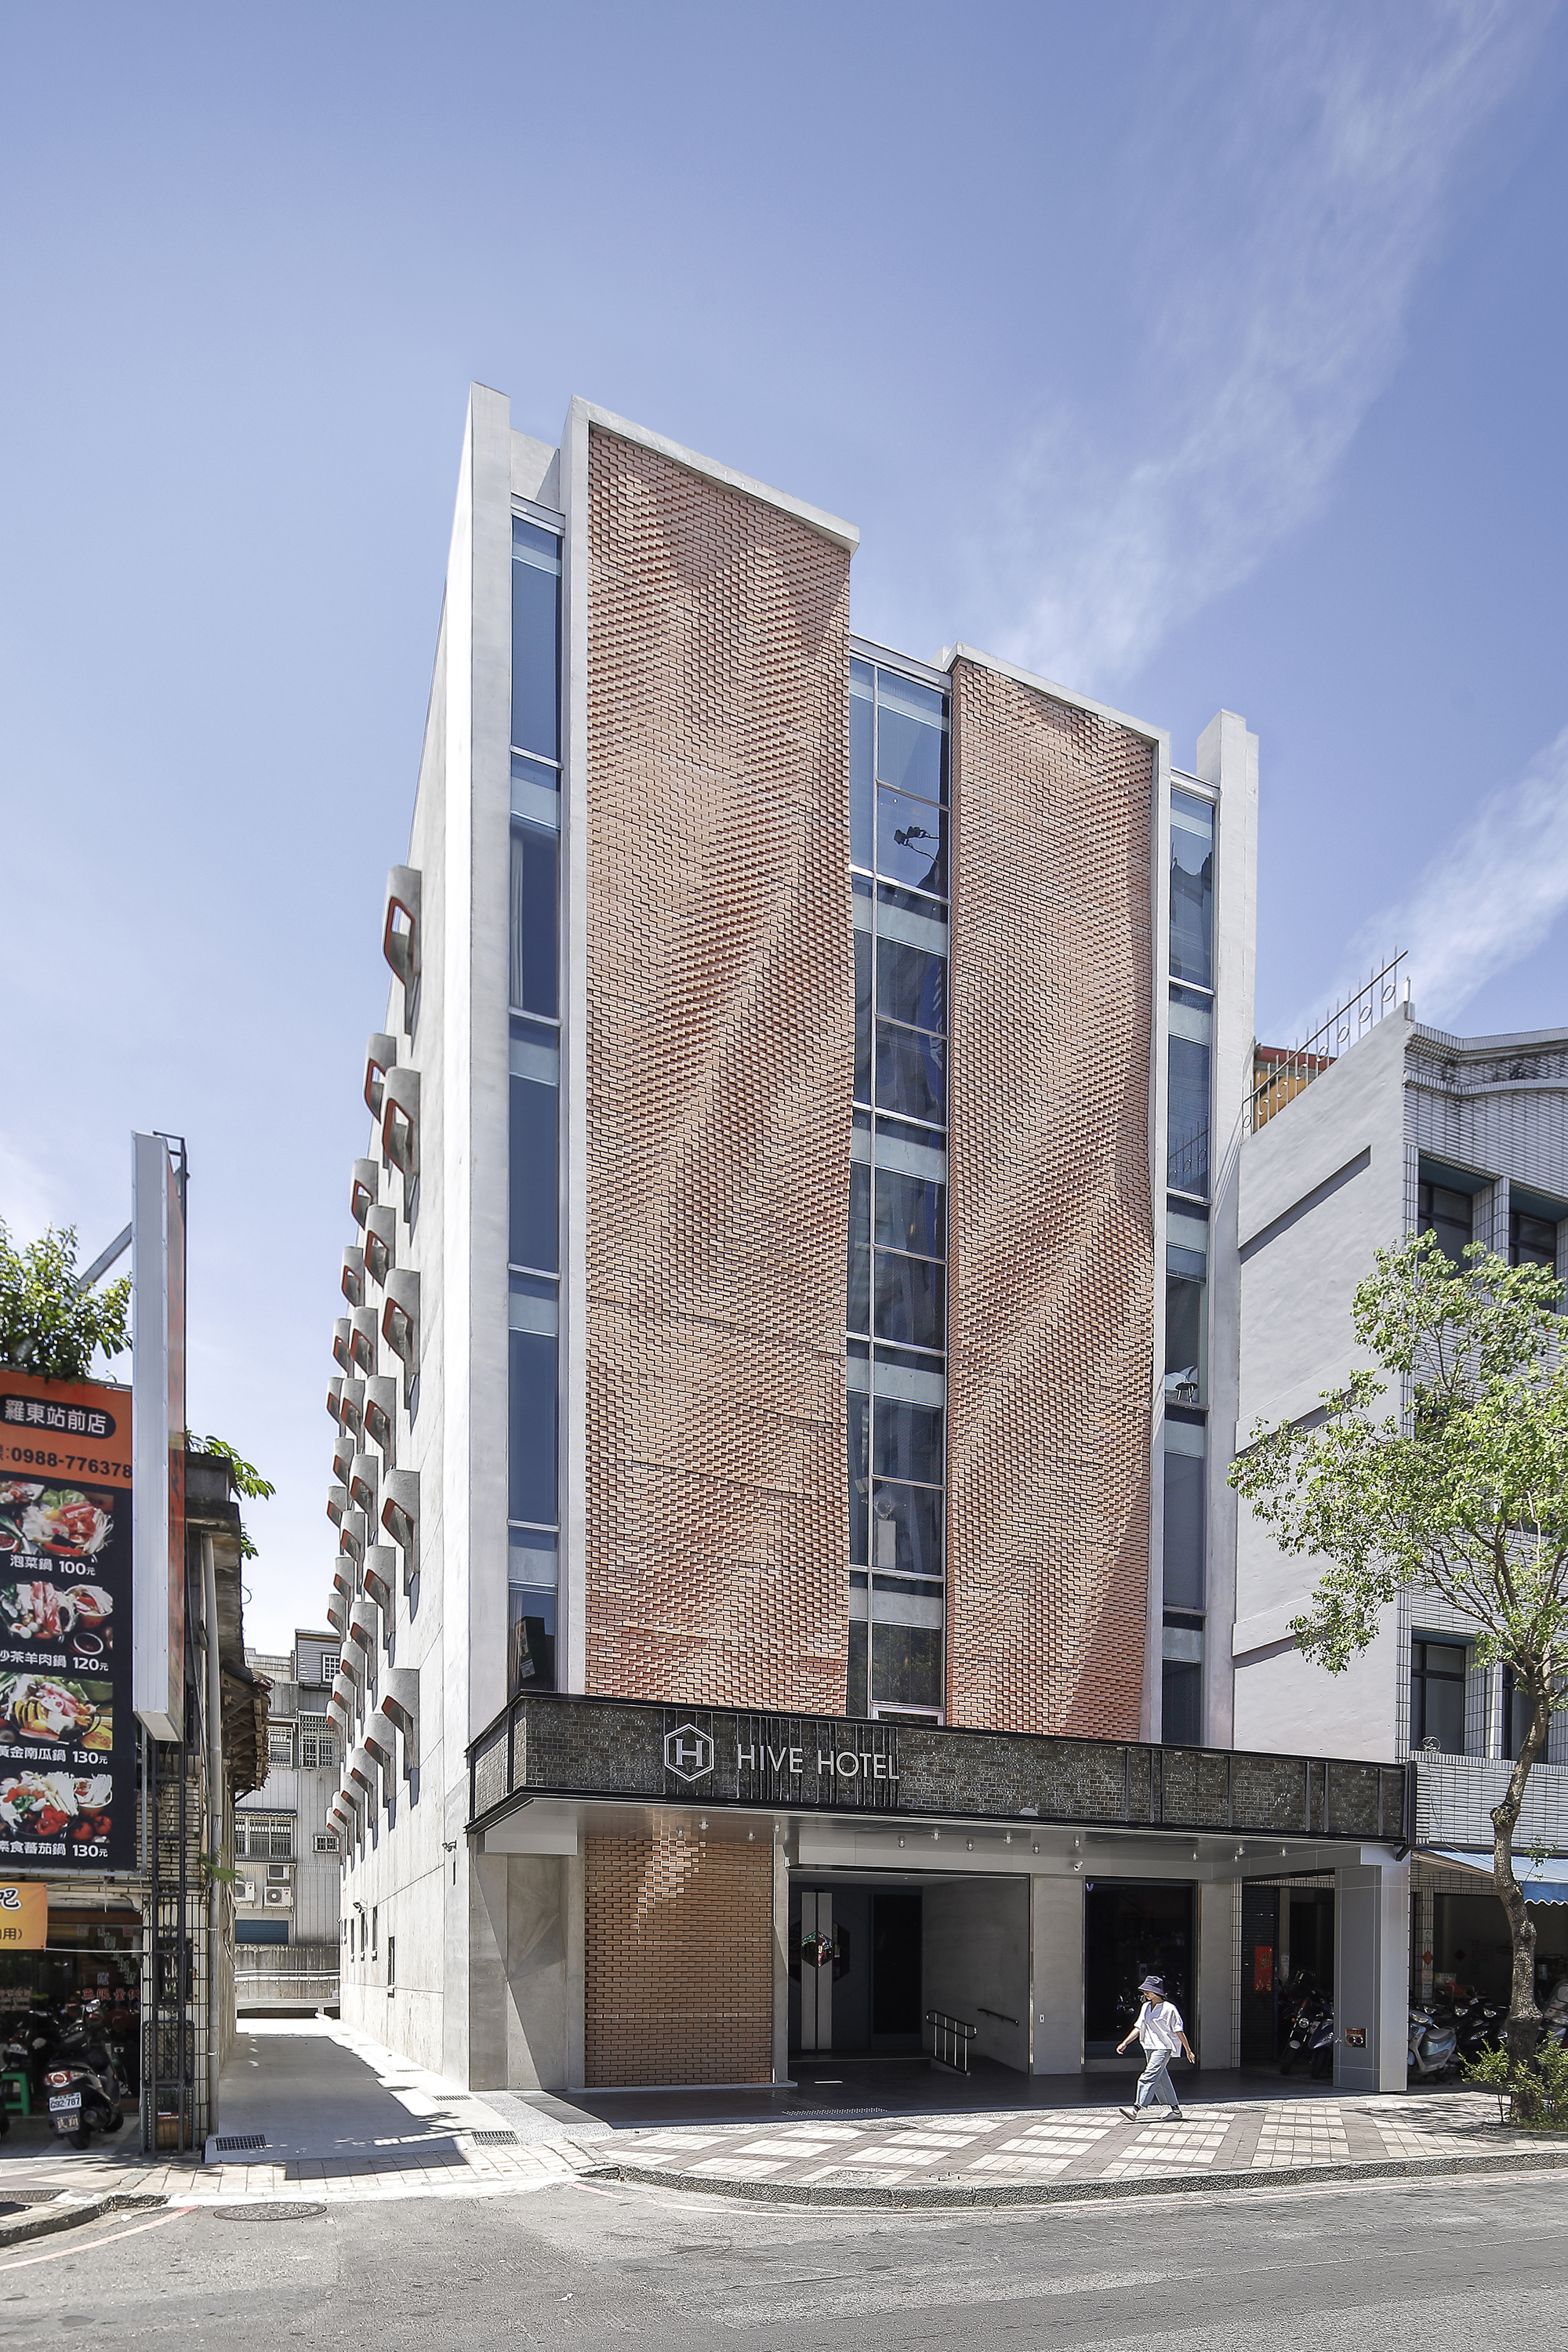 Hive Hotel Facade Remodel / Preposition Architecture | ArchDaily